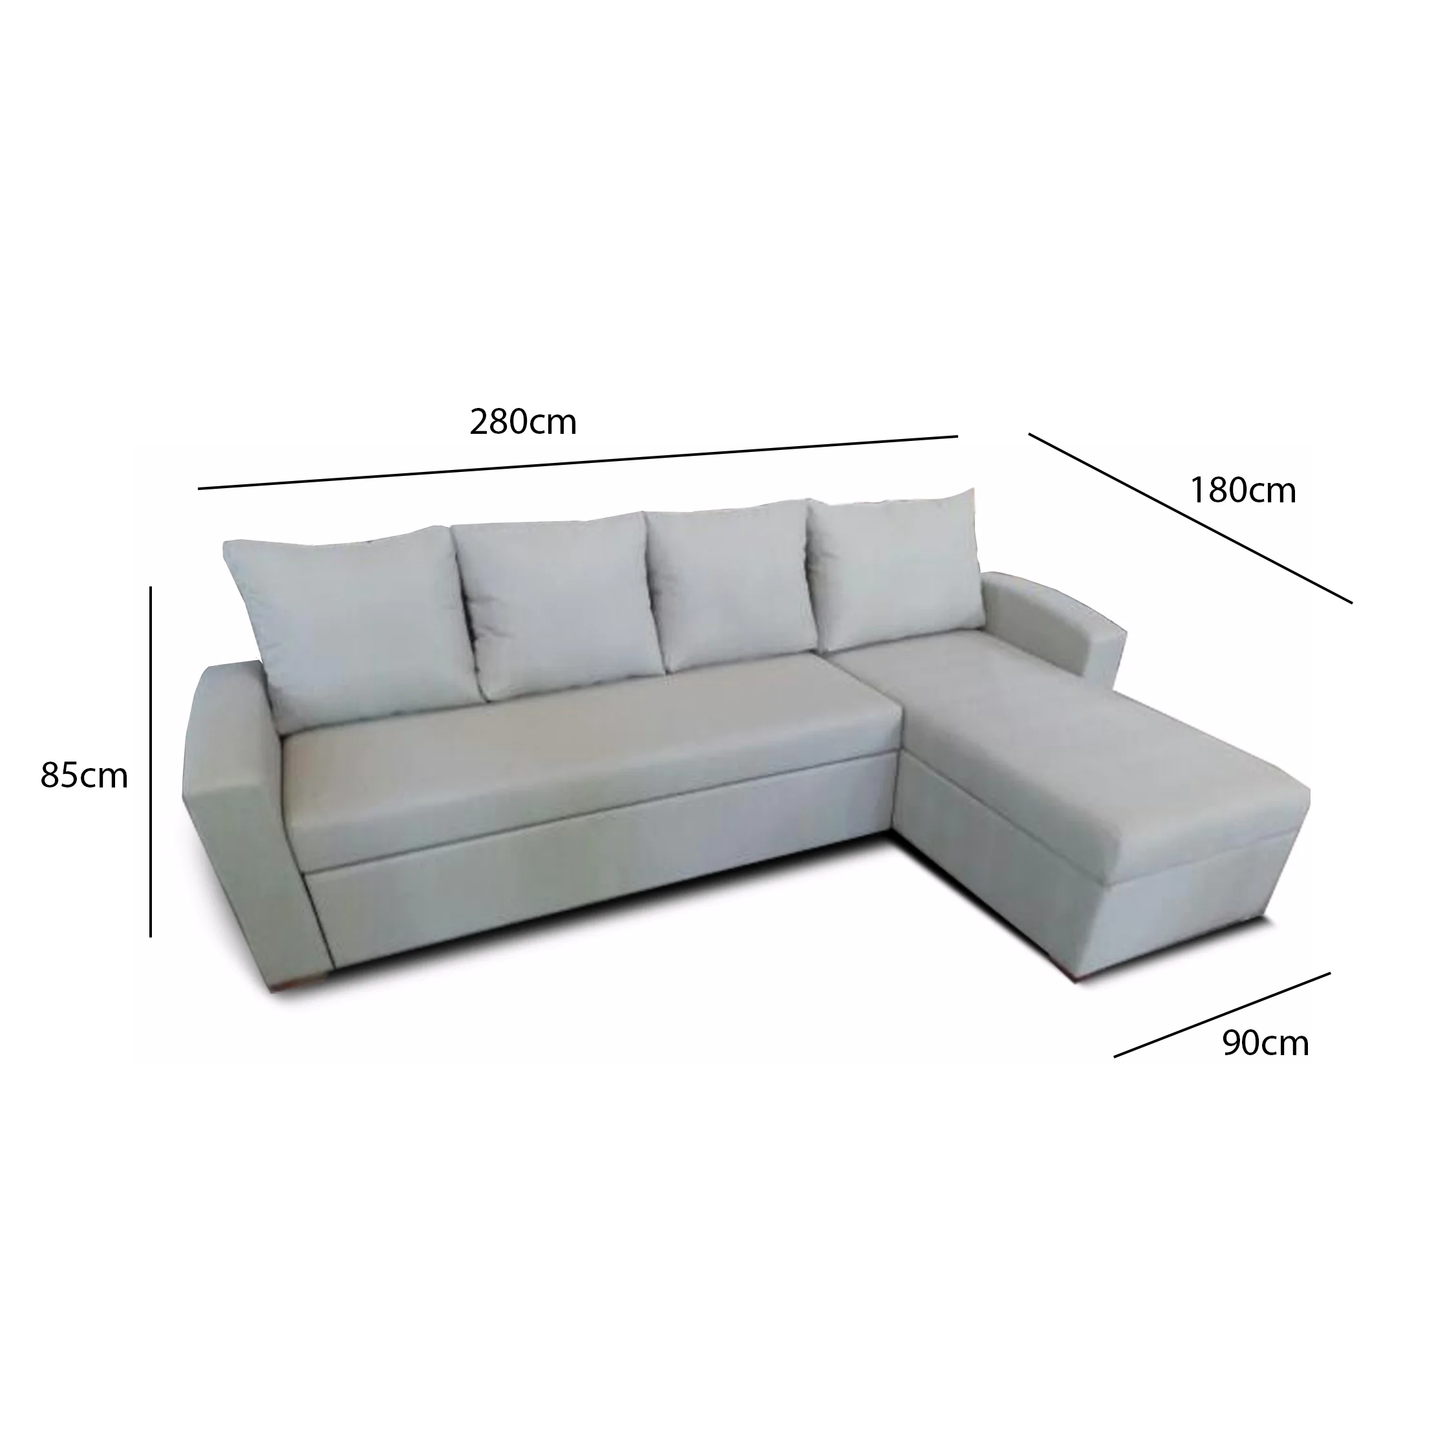 Beech wood sofa corner 280 x 180 cm - multiple colors - KM141